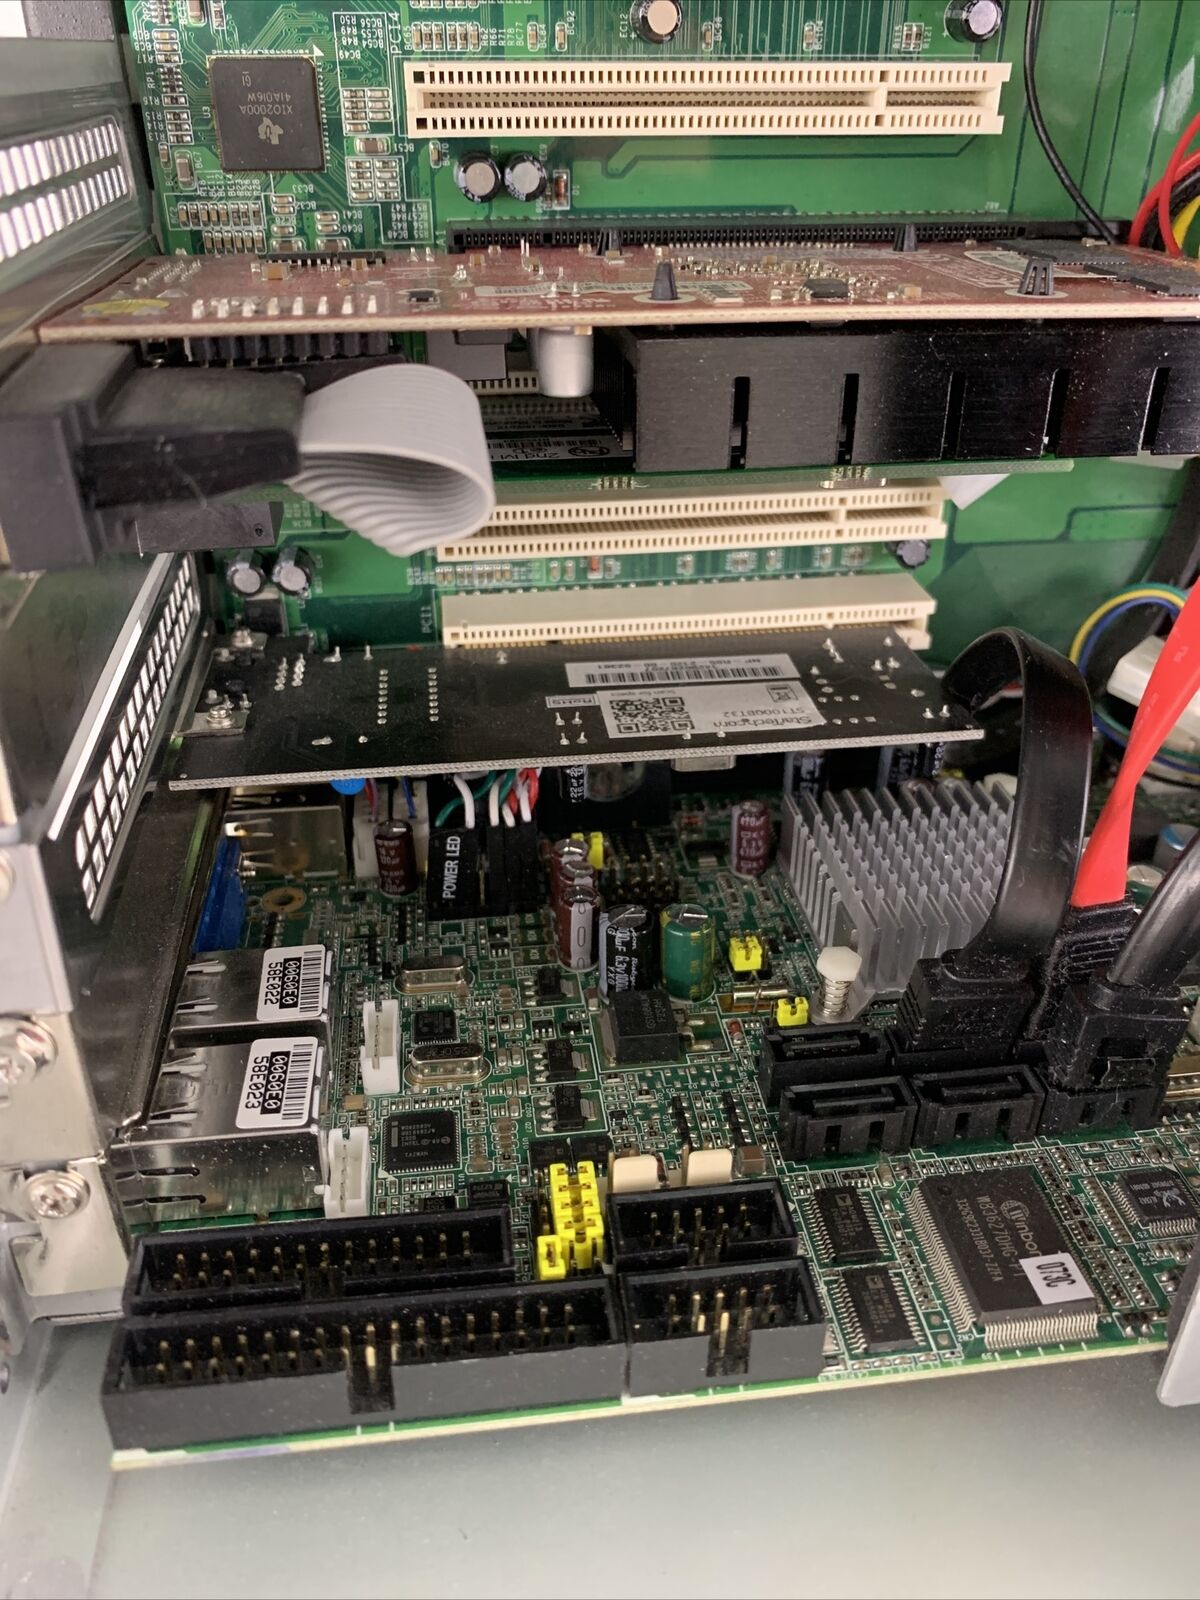 Industrial PC IPC SHB103 Rev. A2-RC Intel Core i7-860 2.8GHz 3GB RAM No HDDOS